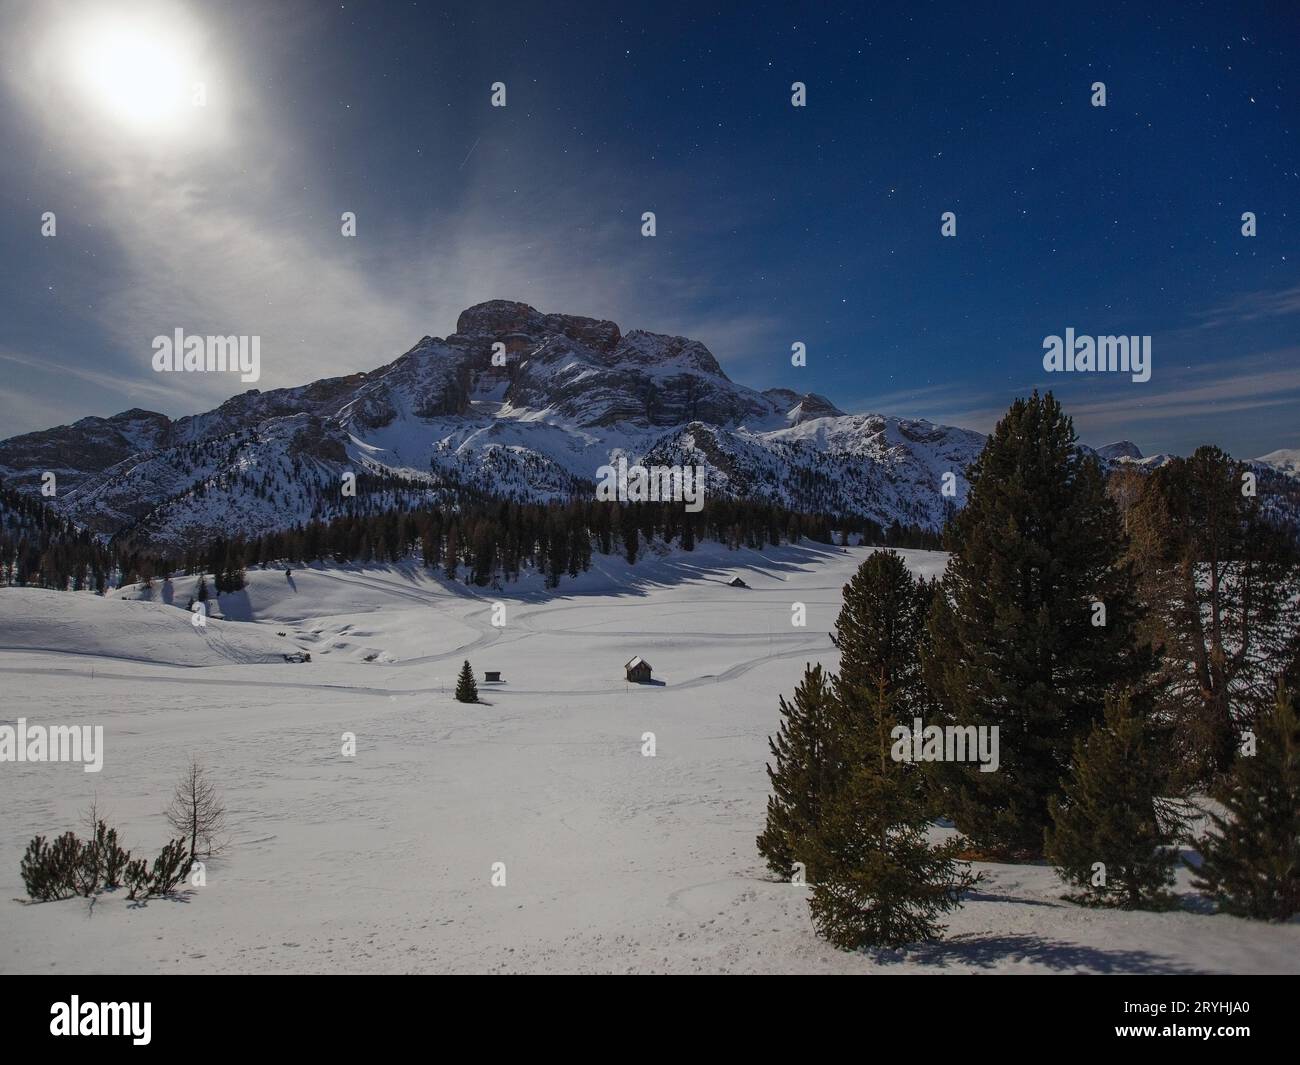 Moonlight illuminates the Prato Piazza plateau and Croda Rossa d'Ampezzo mountain. Winter night alpine landscape in Dolomites. Italian Alps. Europe. Stock Photo